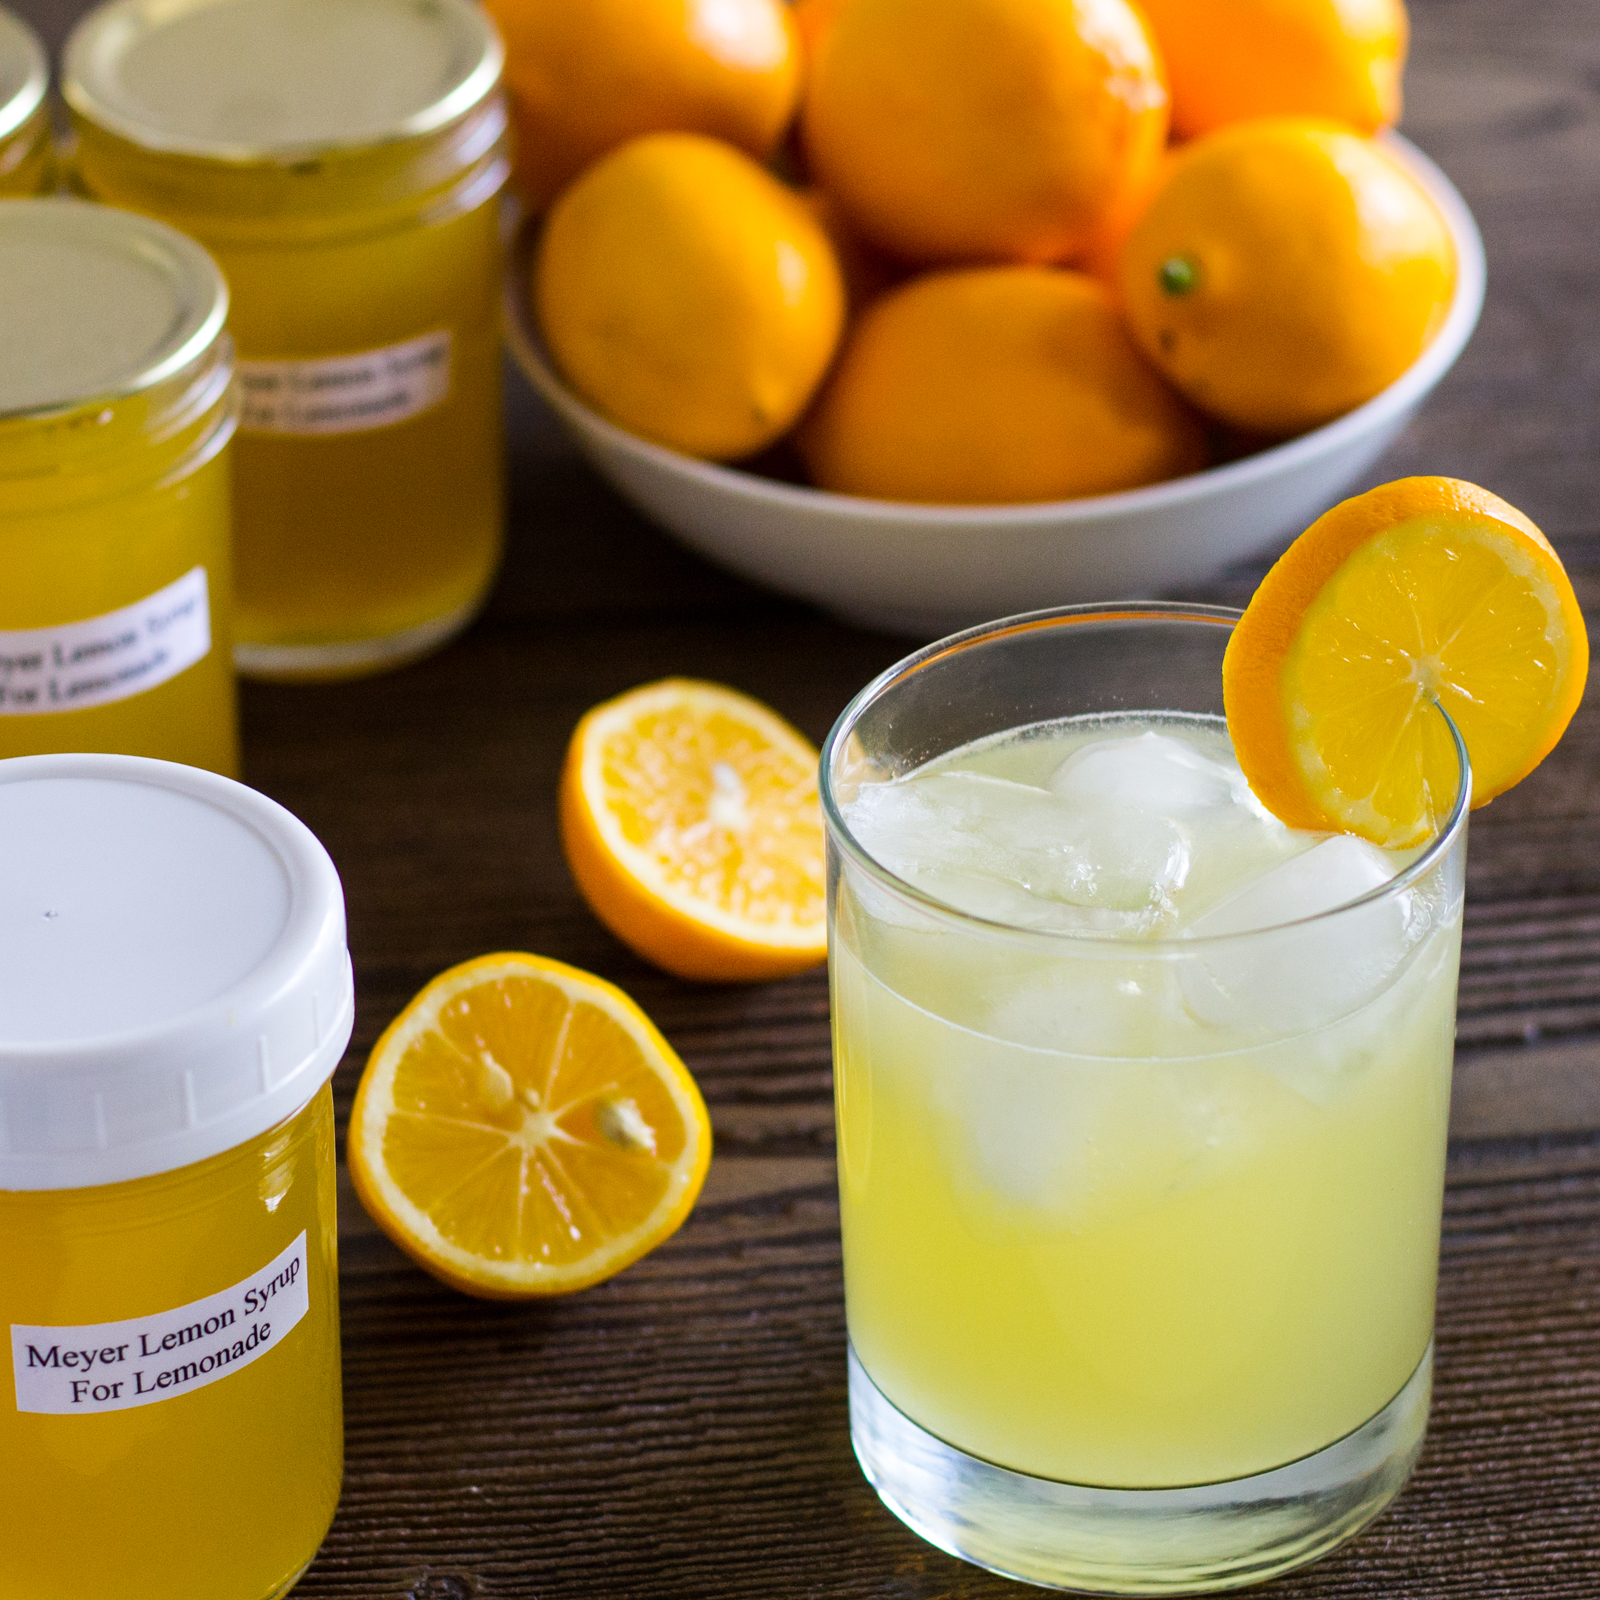 Glass and jars of lemonade